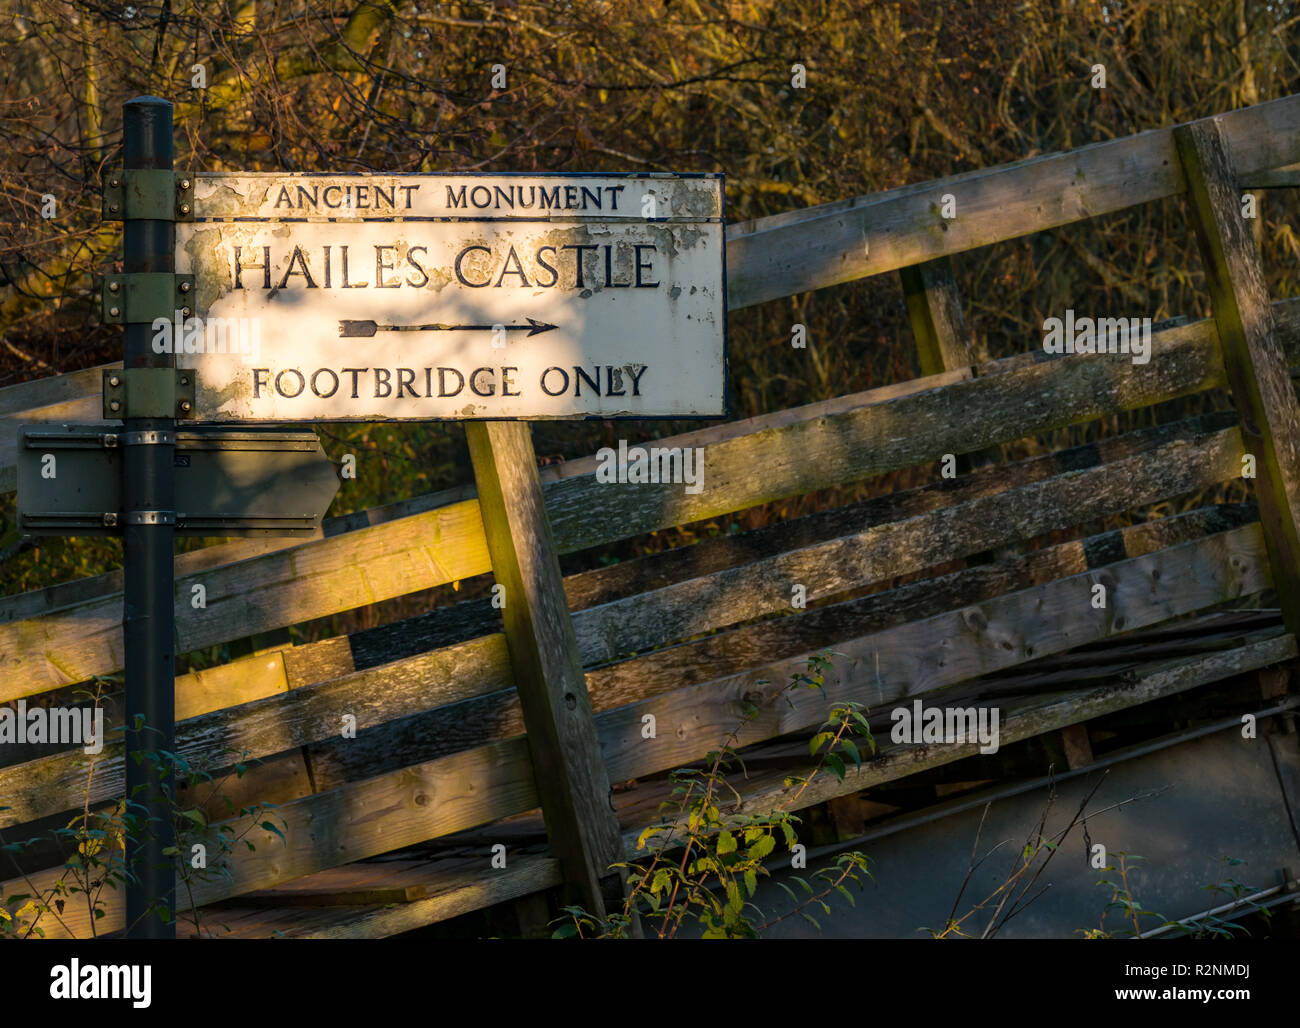 Ancient monument direction sign to Hailes castle over footbridge, East Lothian, Scotland, UK Stock Photo